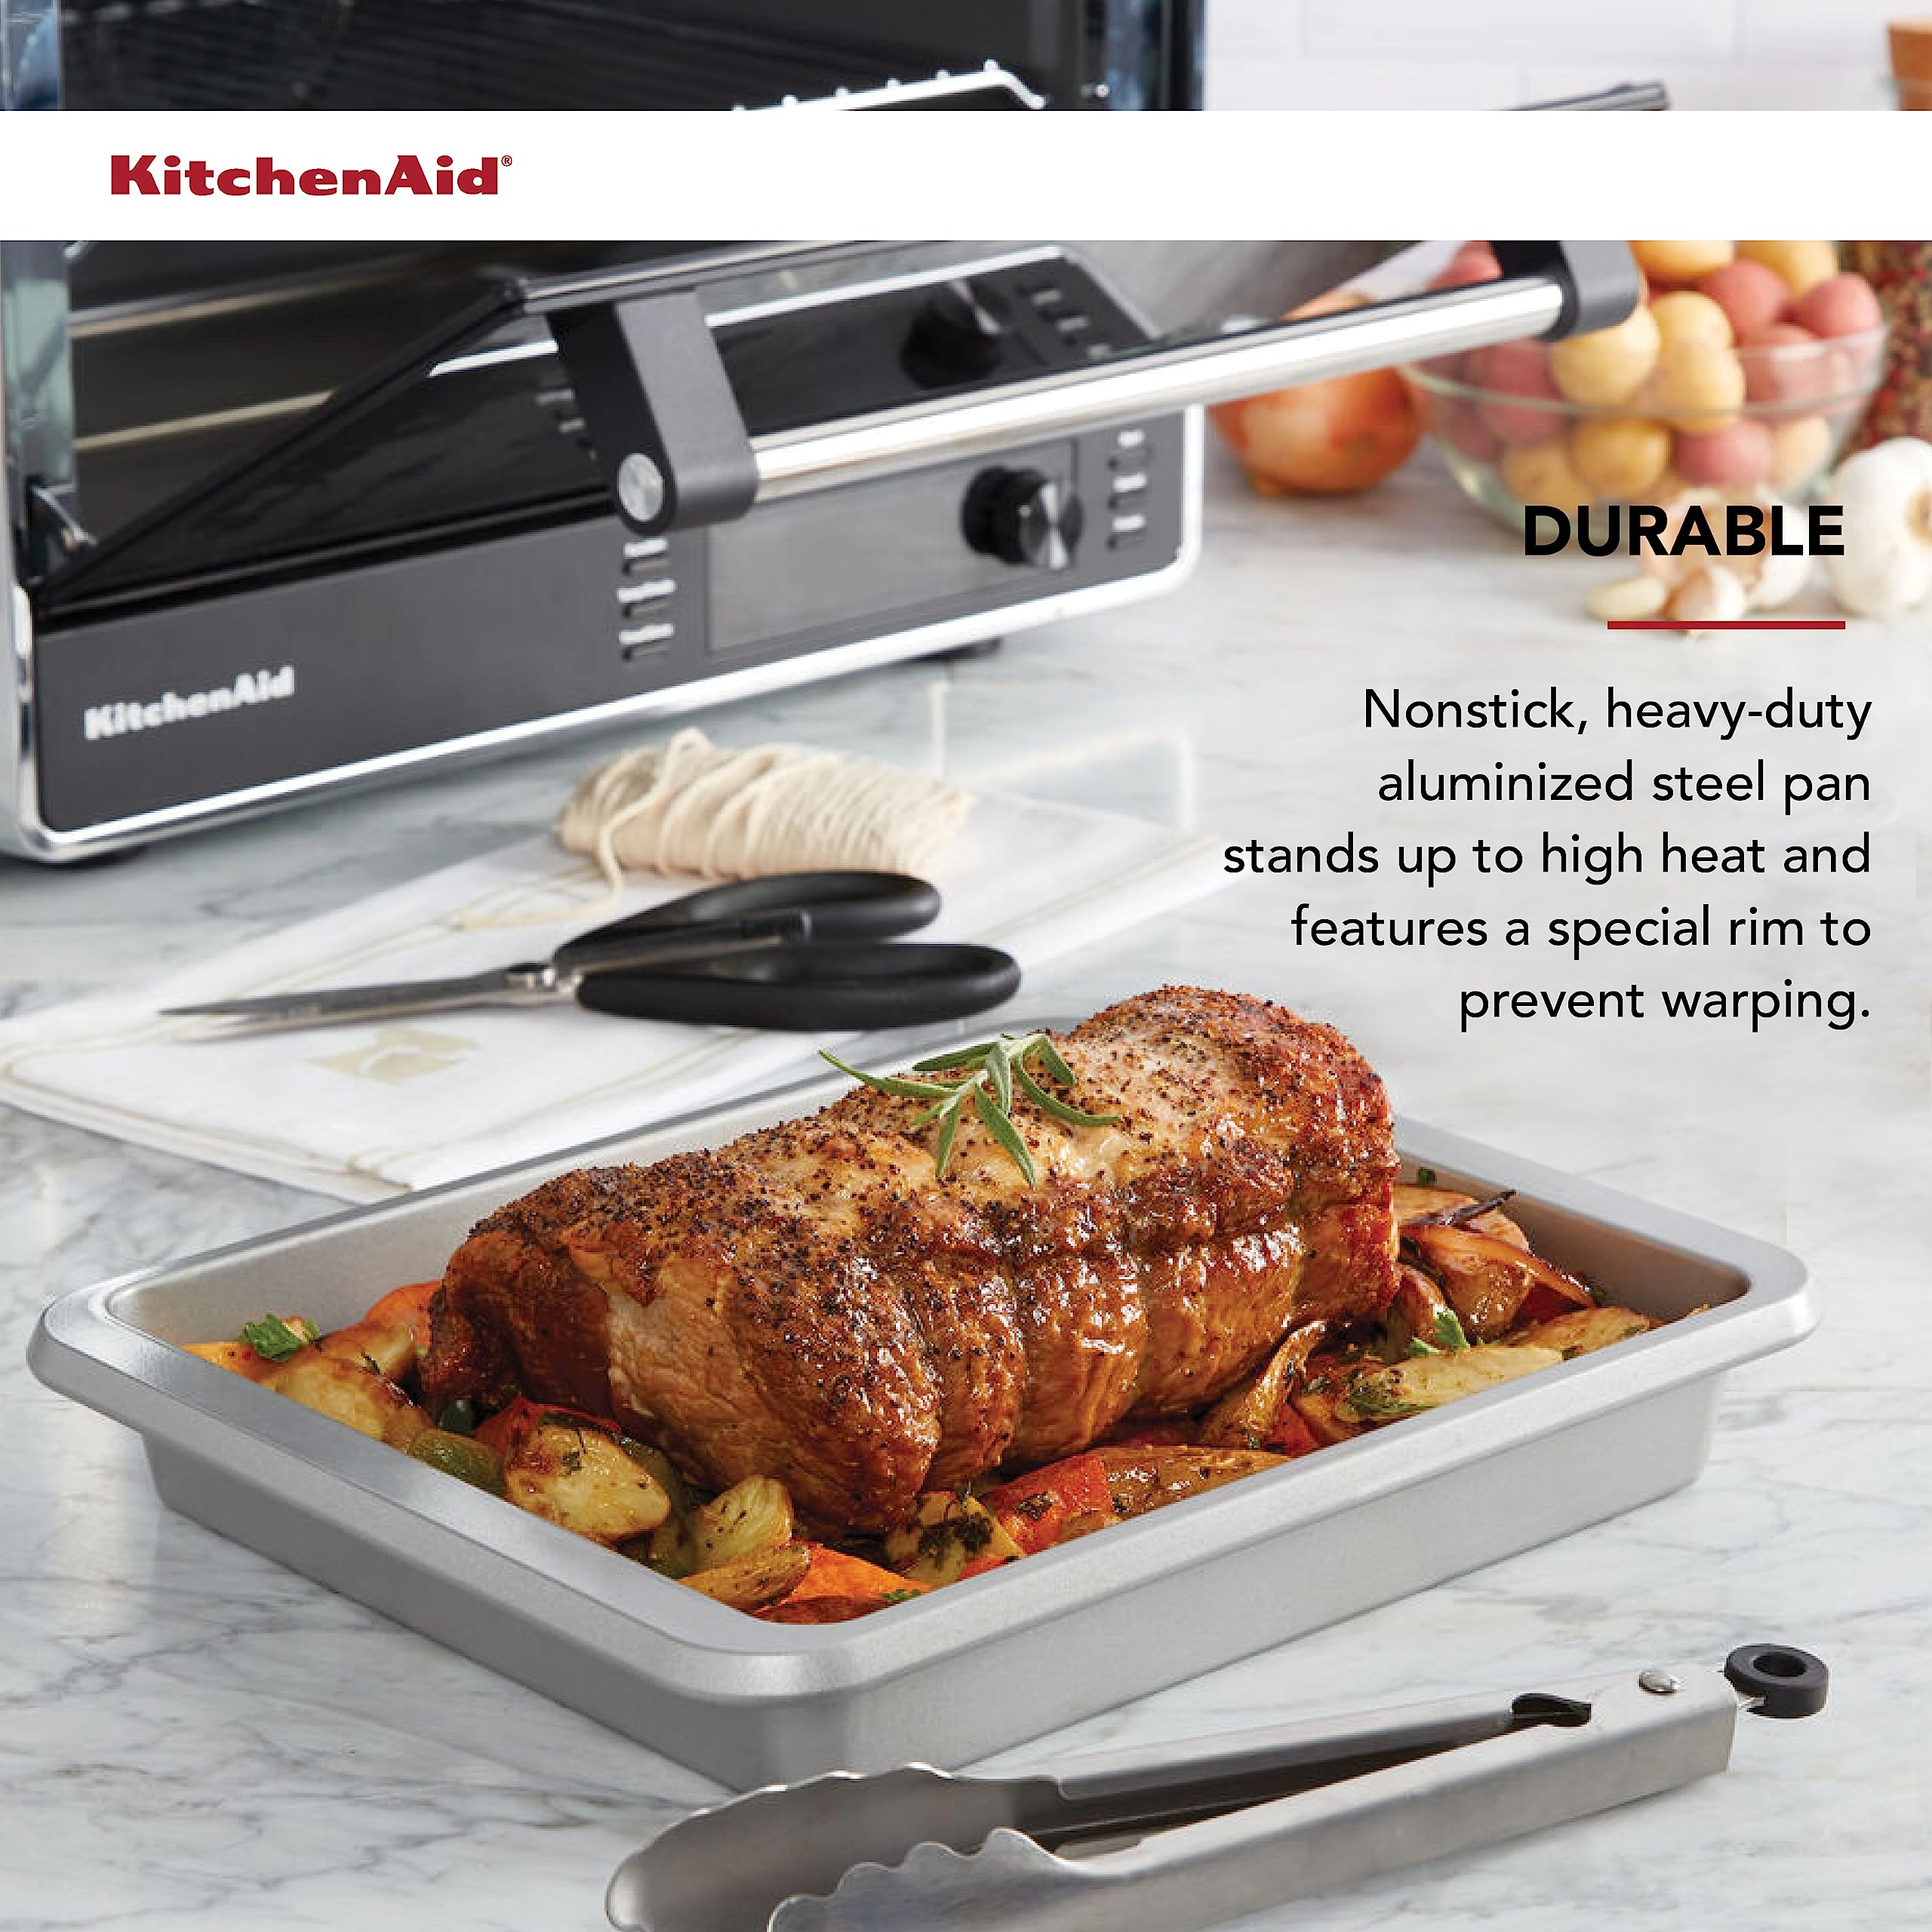 KitchenAid Countertop Oven Rectangular Baker, 12.3 x 10 Inch, Silver